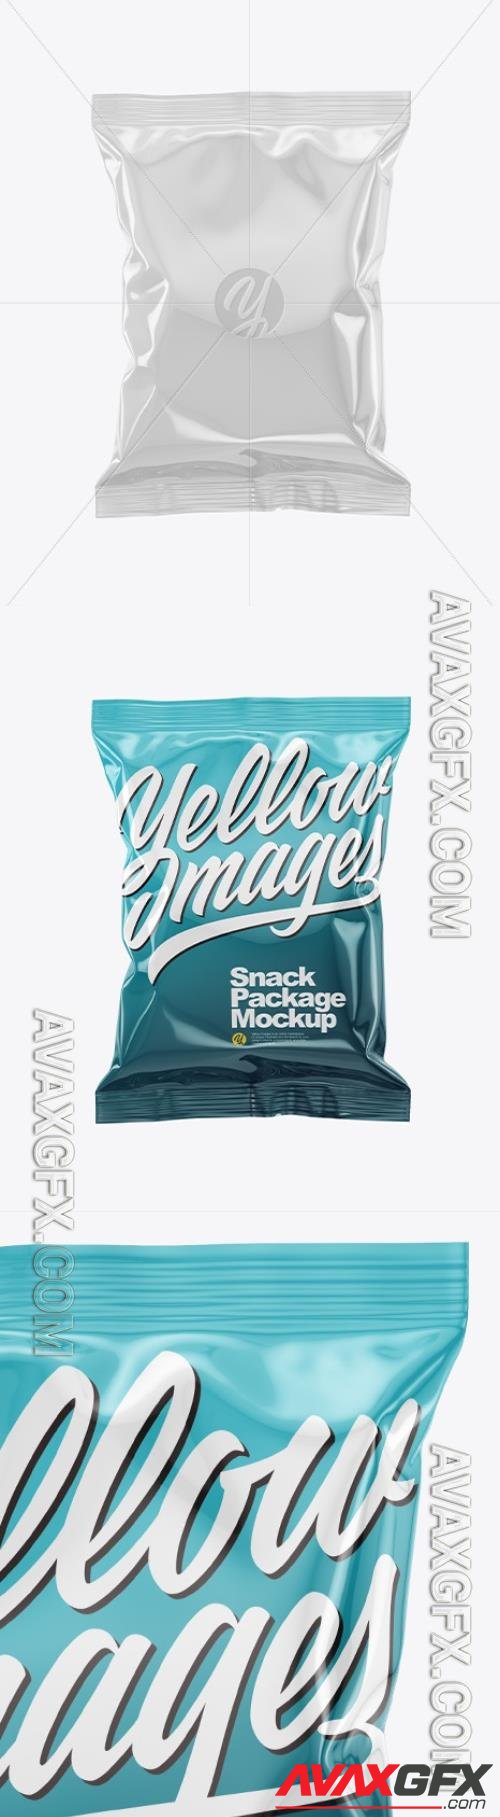 Glossy Snack Package Mockup 50510 [TIF]